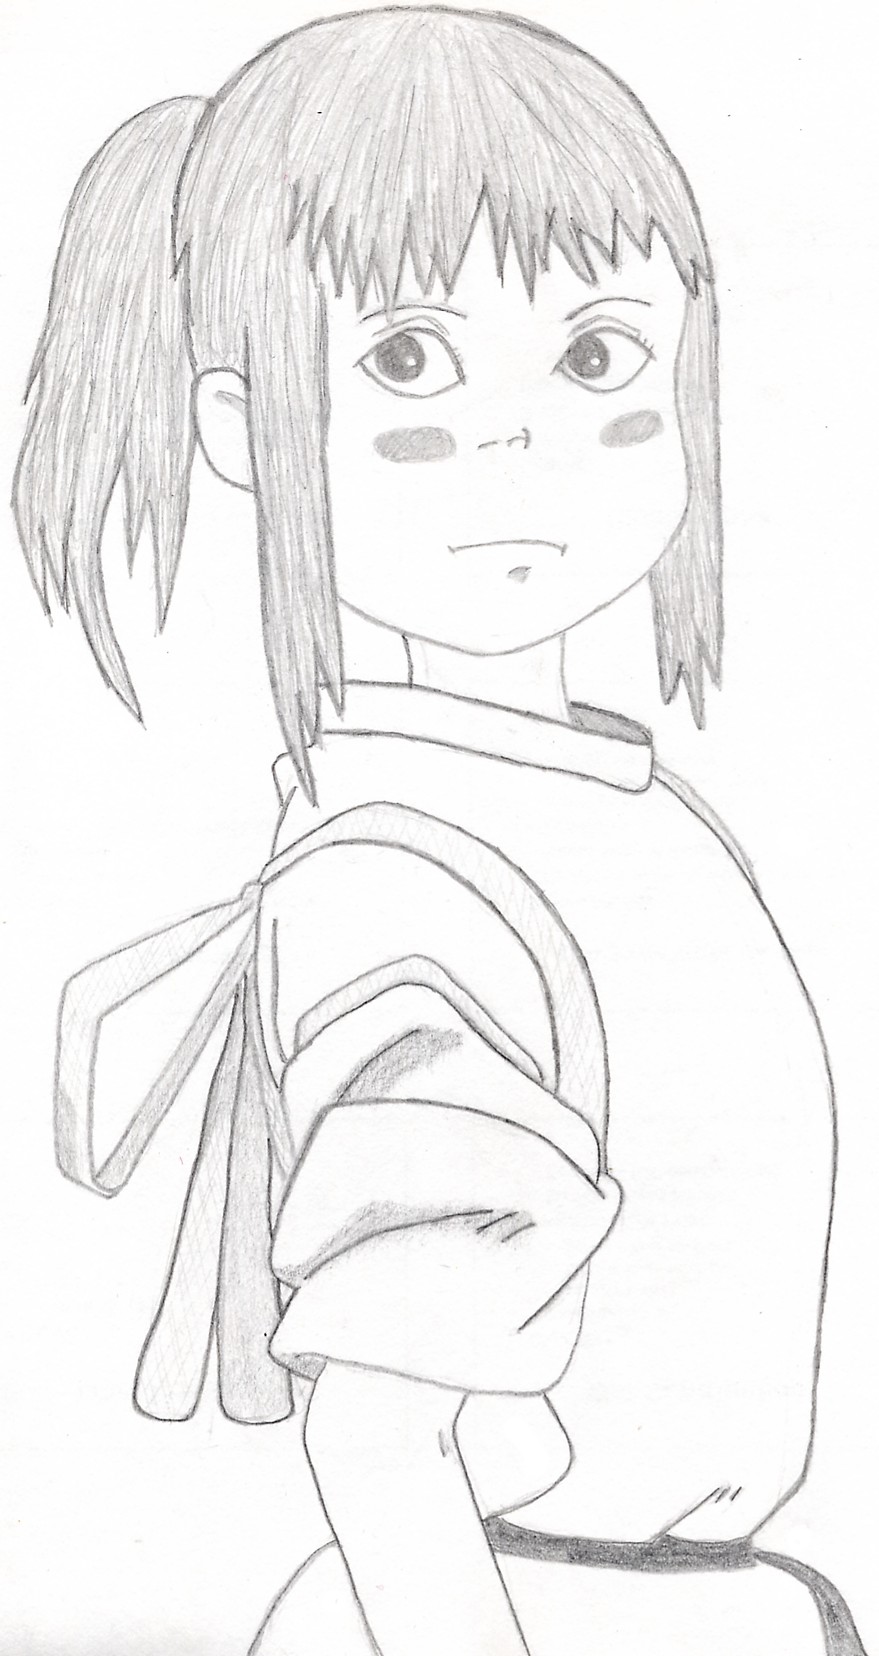 Chihiro sketch by shenanigan